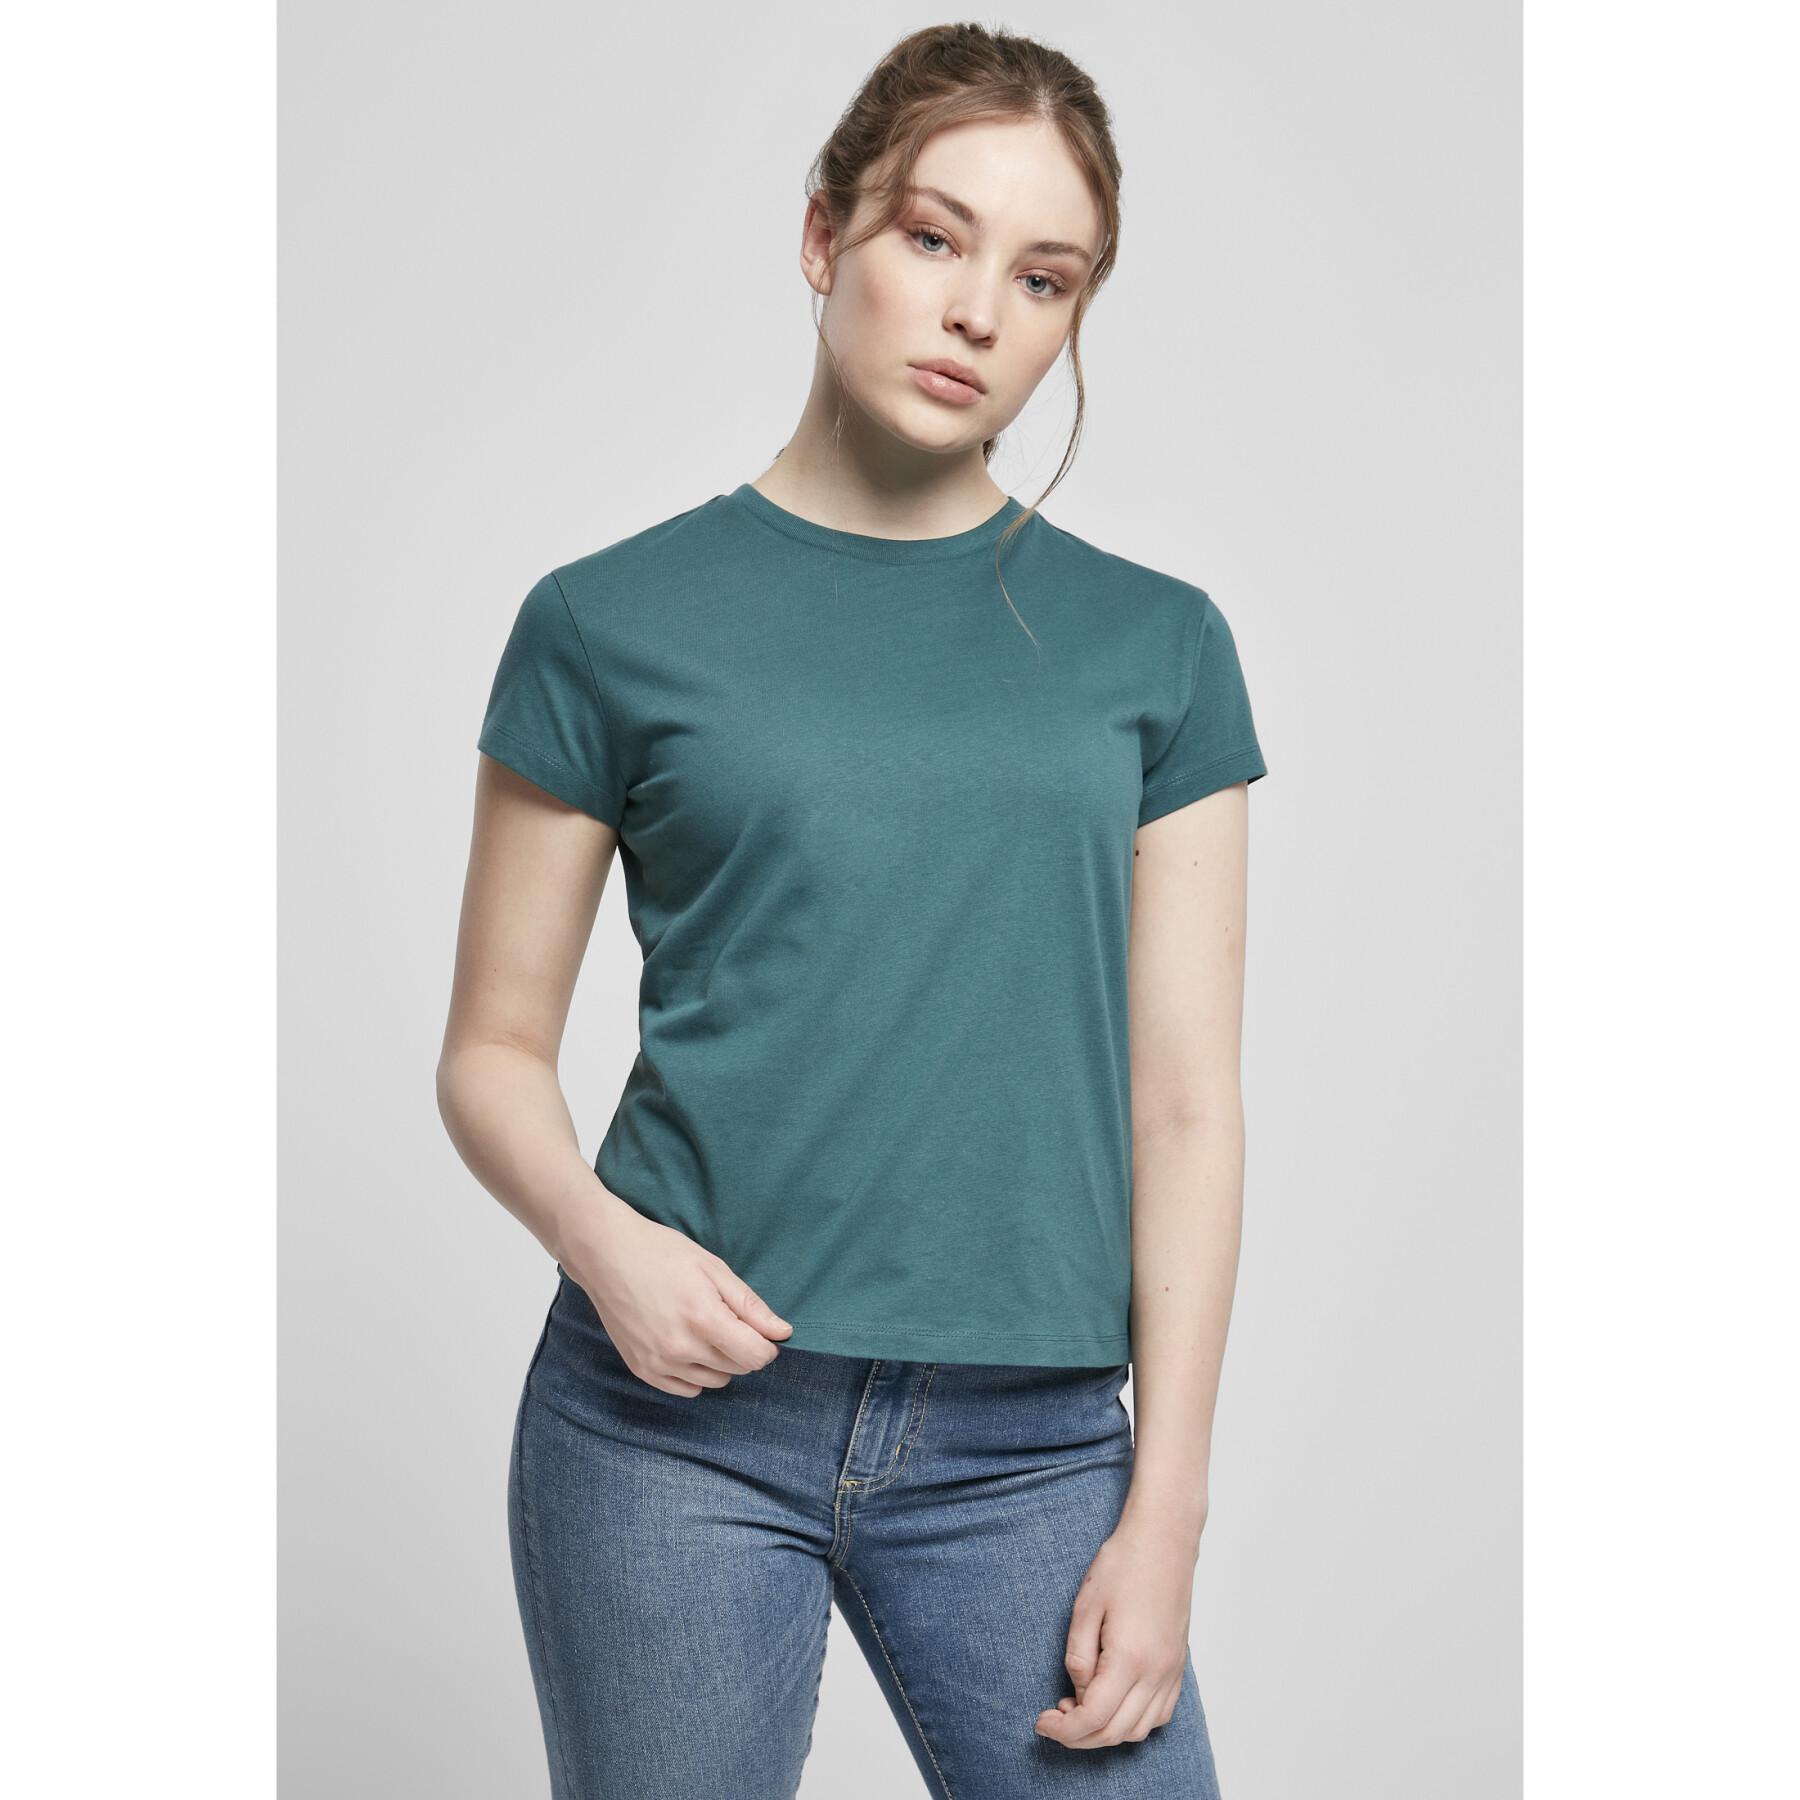 Women's T-shirt Urban Classics basic box- large sizes